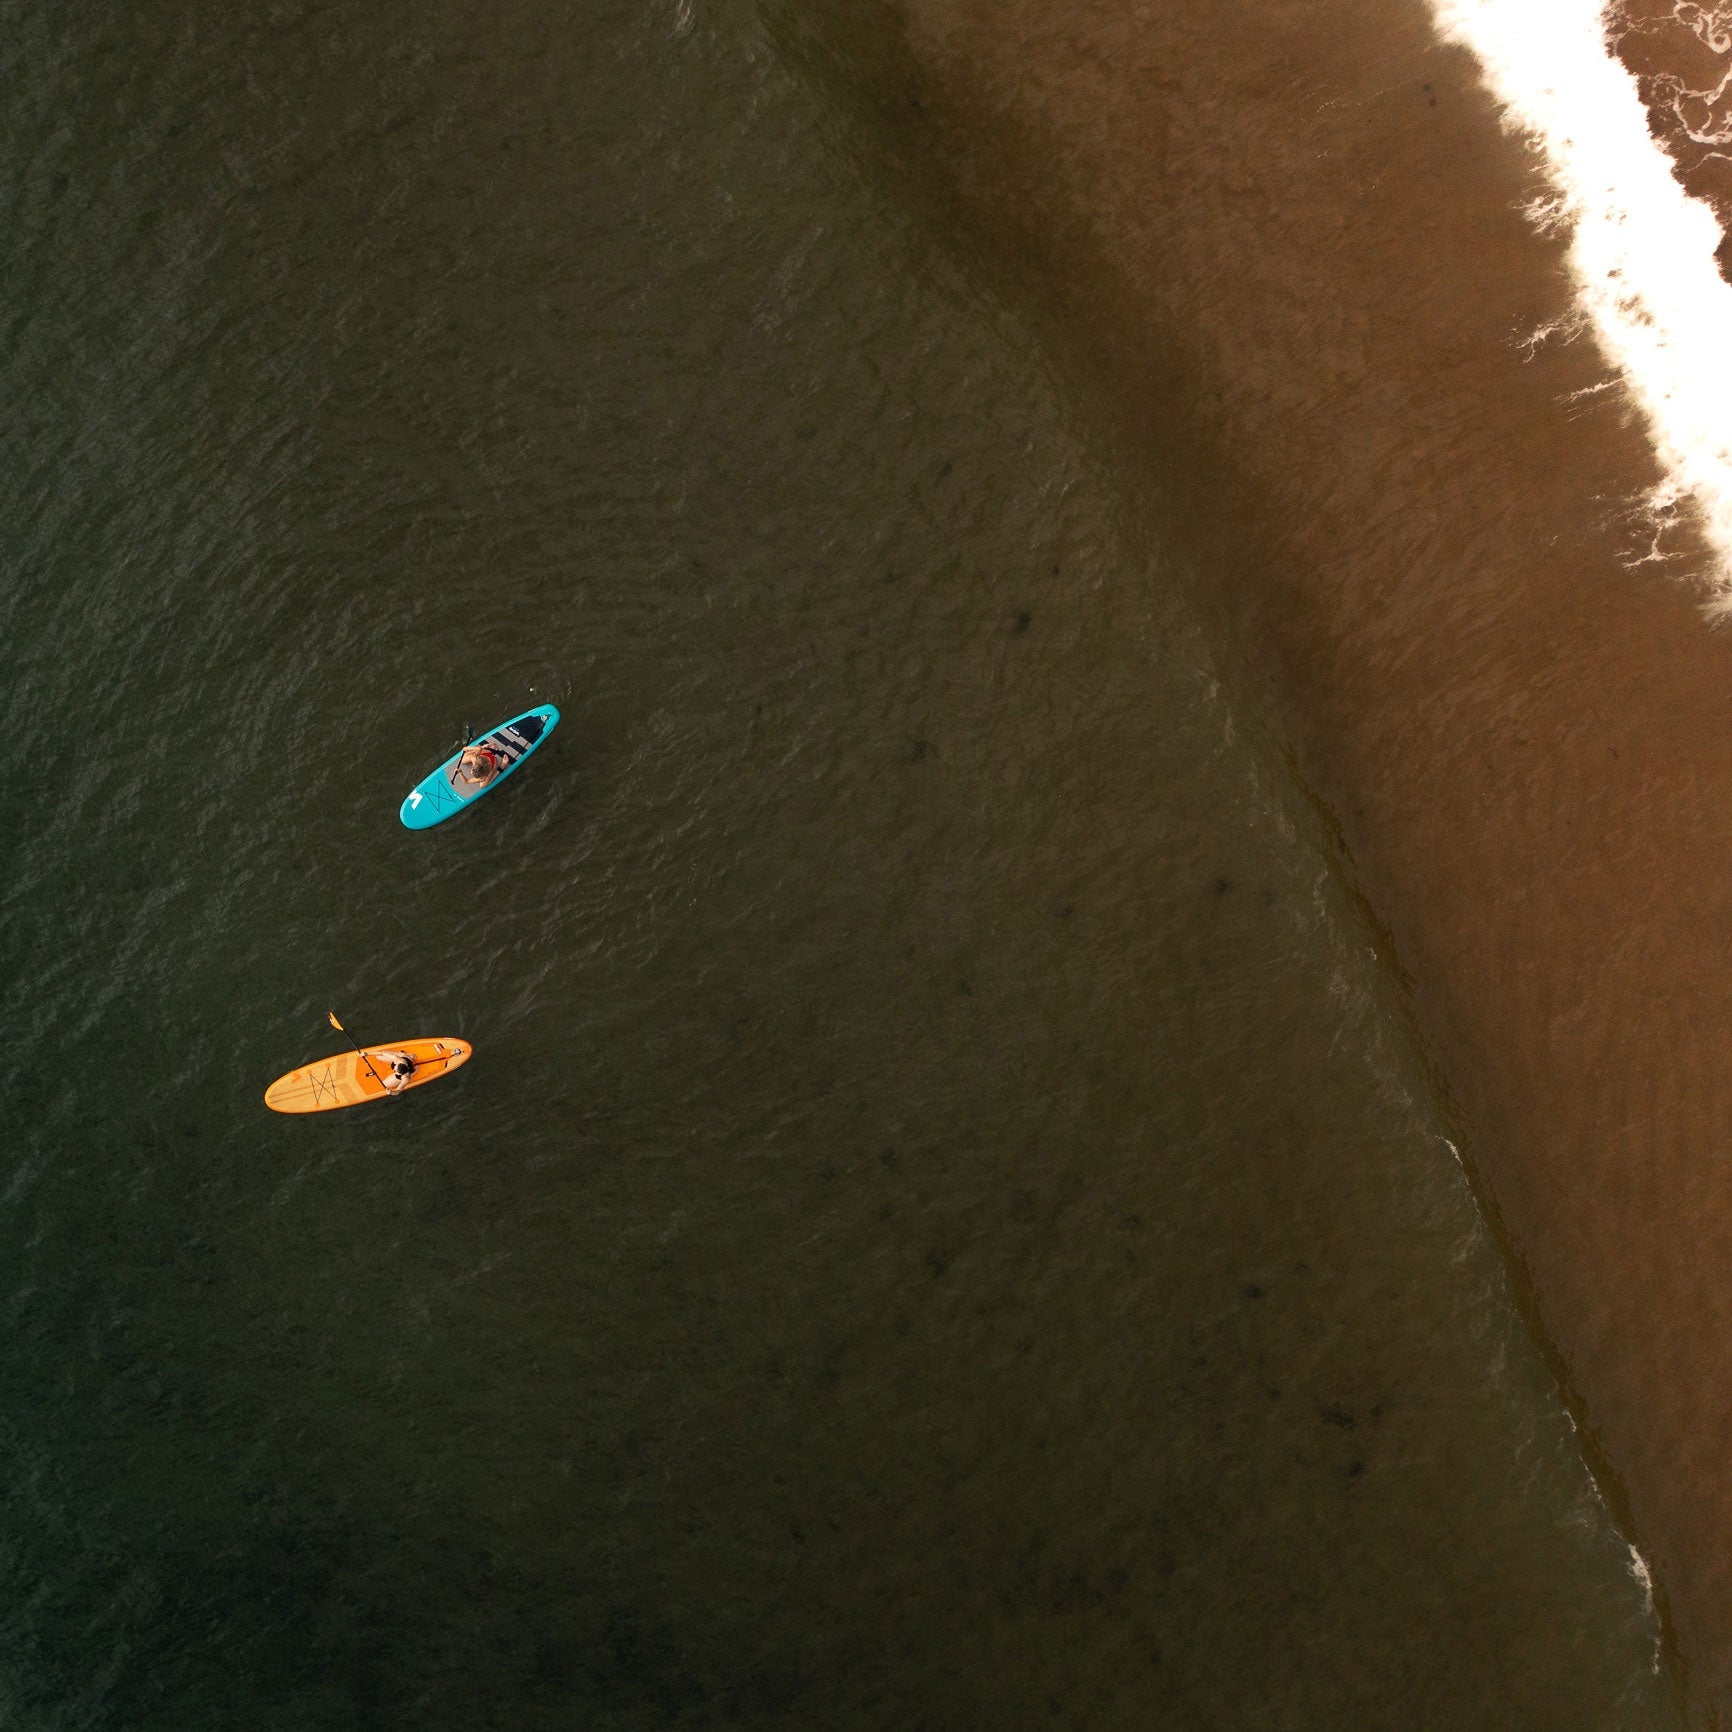 Tourer SUP | Inflatable Stand-Up Paddleboard | 10/11ft | Aqua - Wave Sups EU